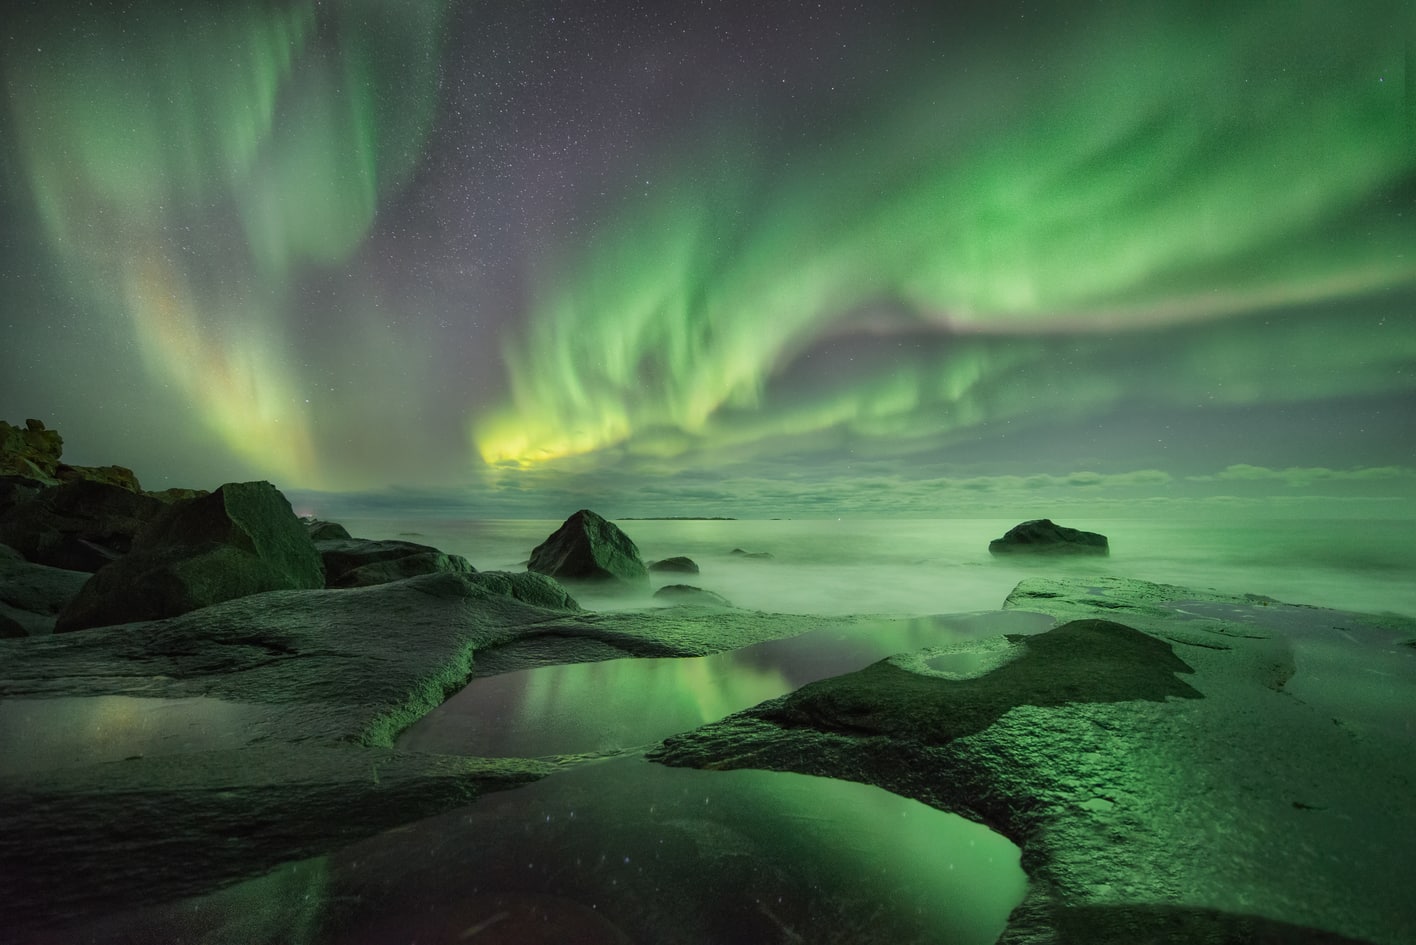 viaje fotografico de auroras boreales en las islas lofoten playa de uttakleiv